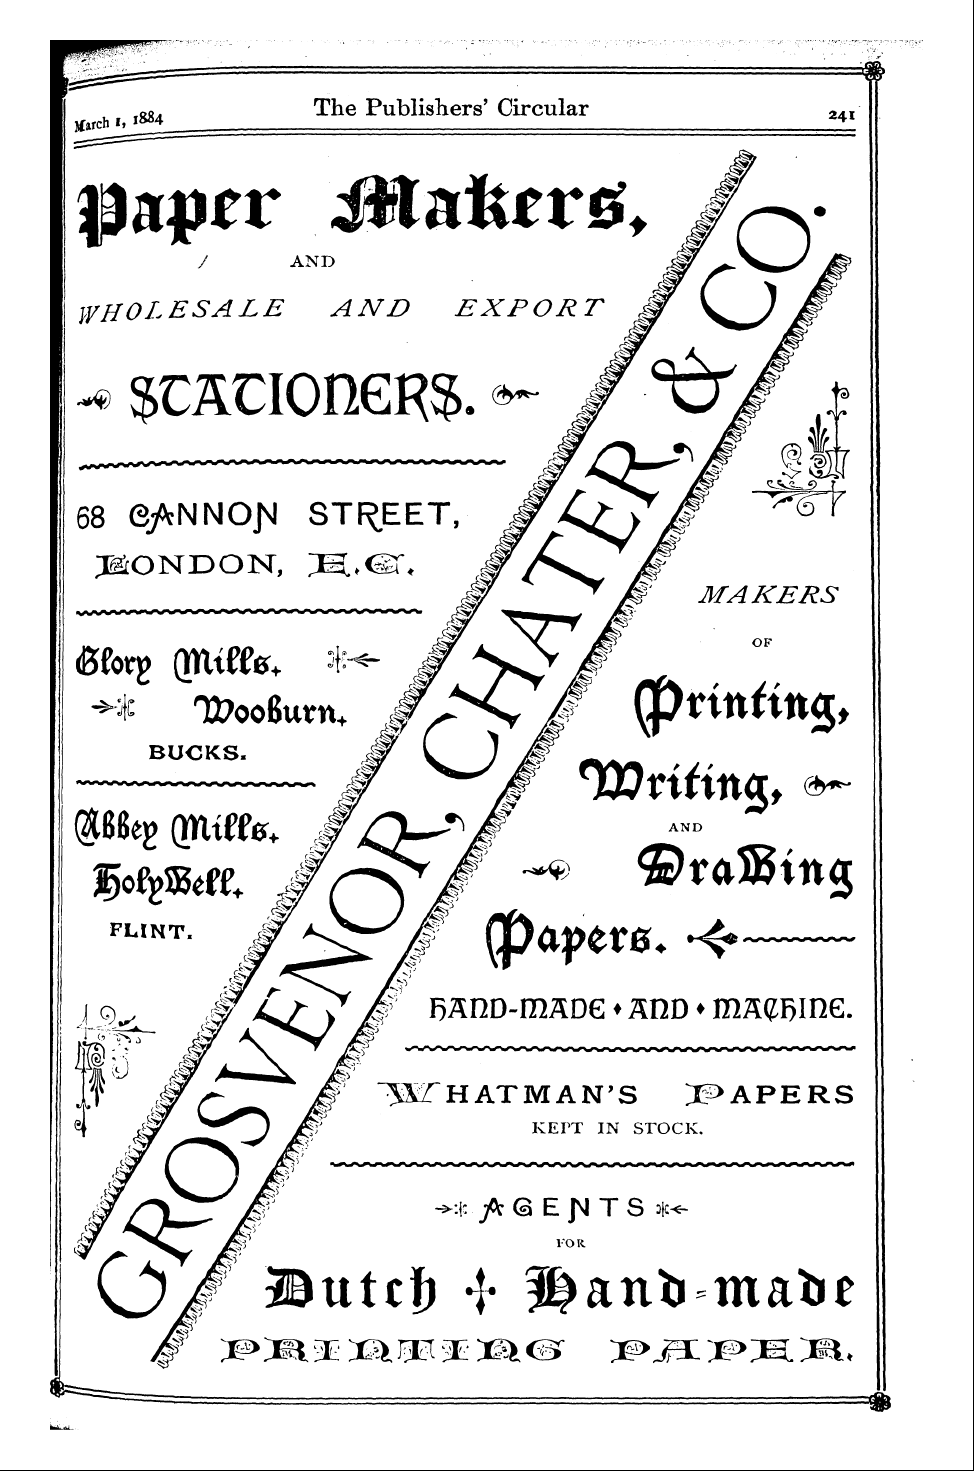 Publishers’ Circular (1880-1890): jS F Y, 1st edition - I I "-"•" '• L884 C8. The Publishers' Ci...